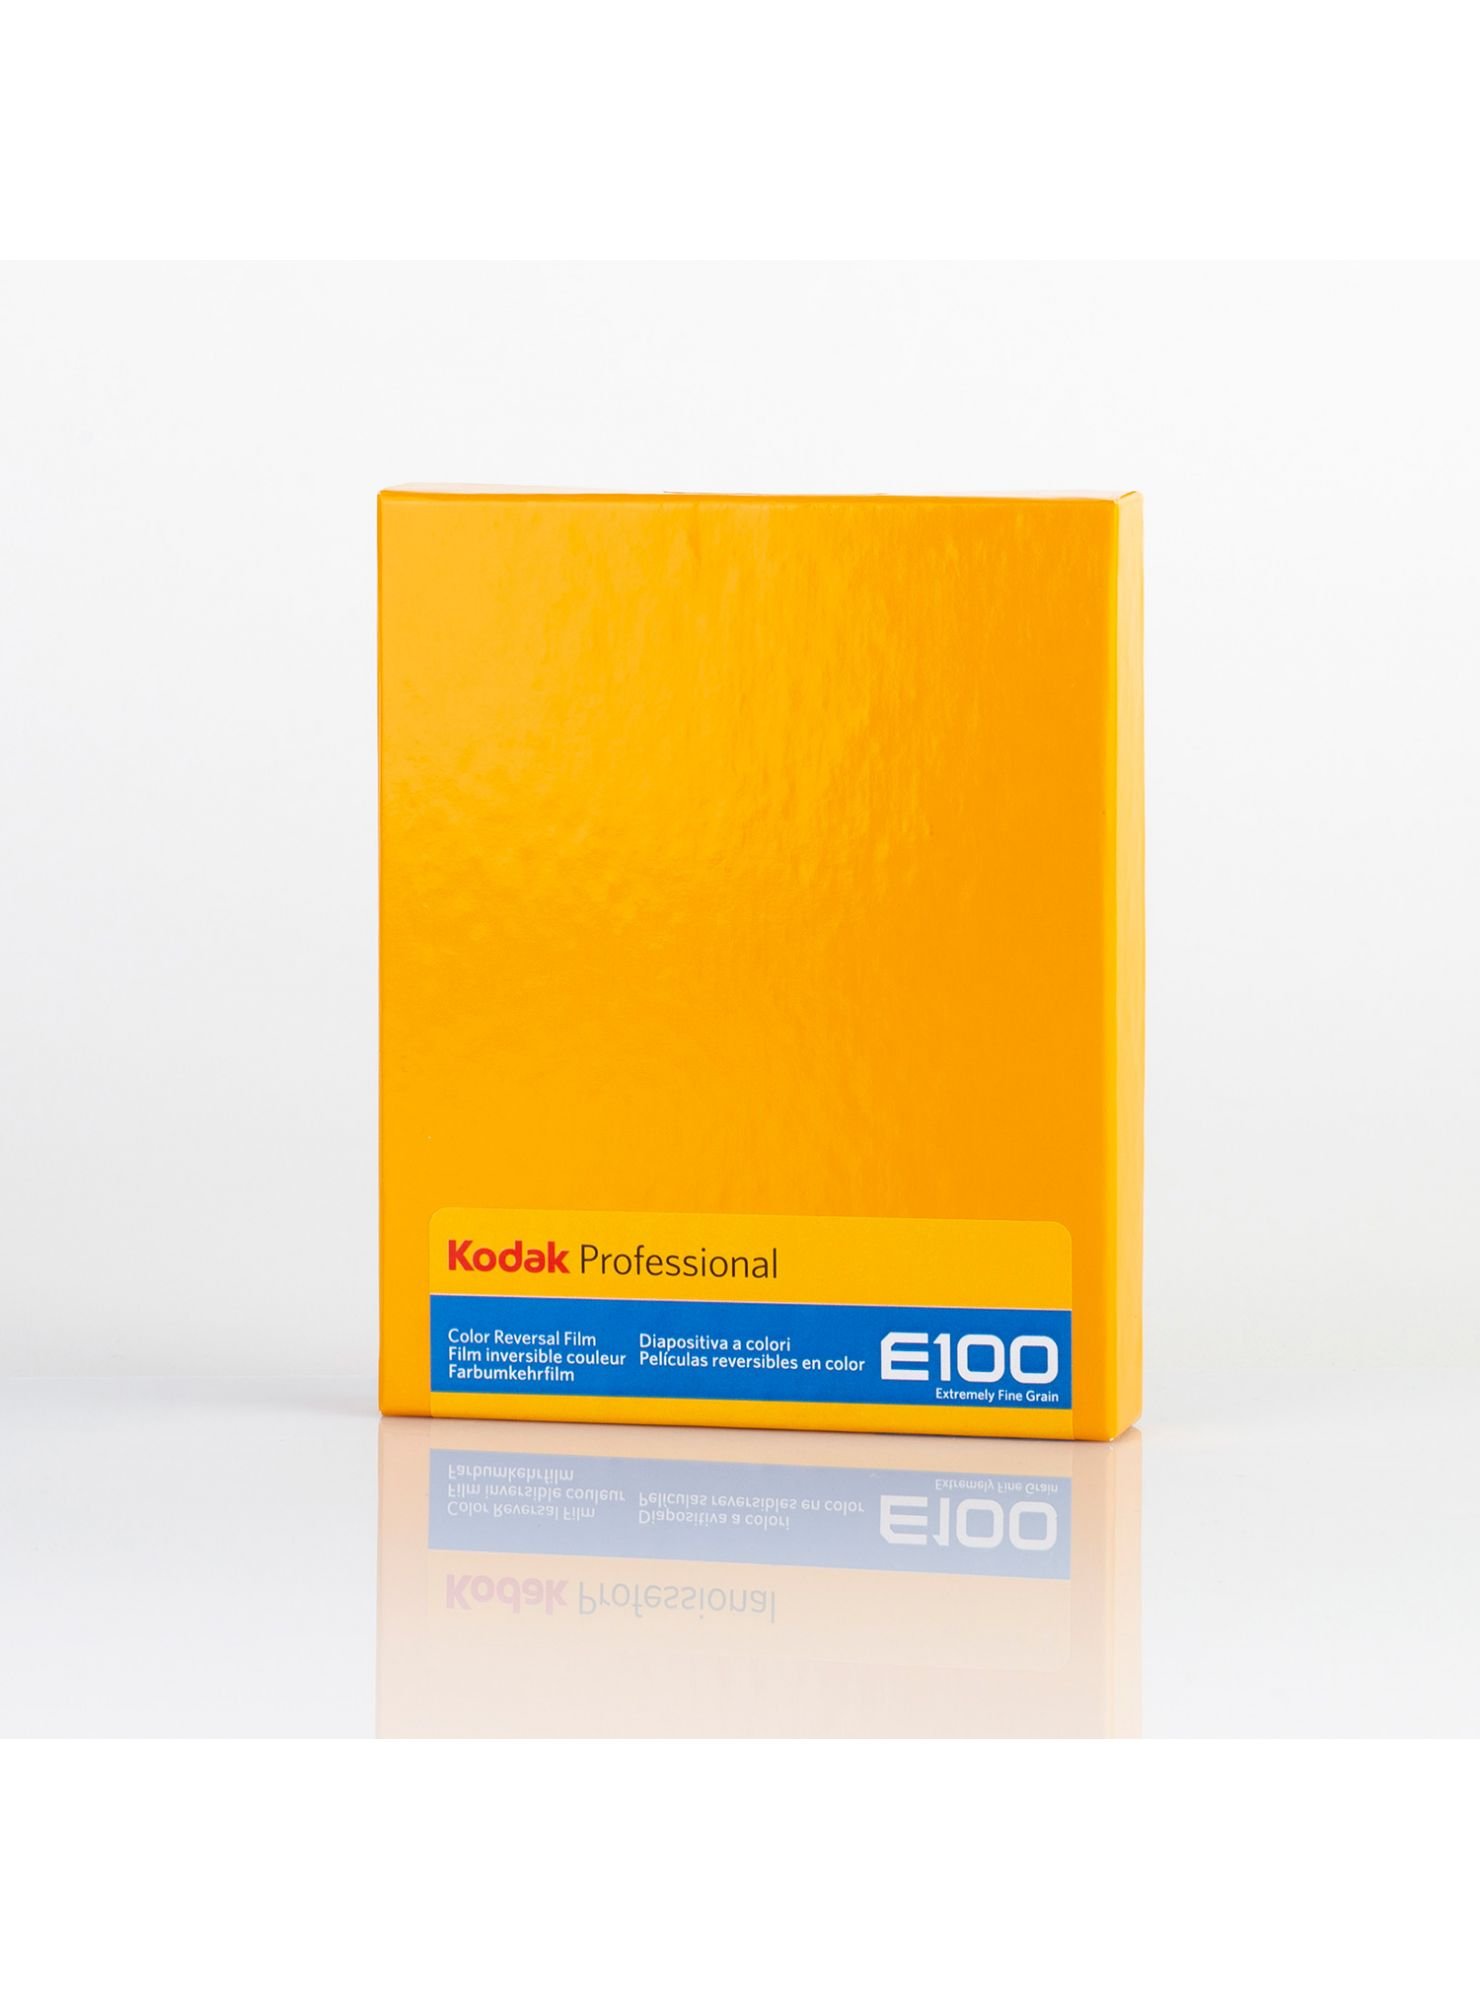 Kodak Ektachrome 100 - 10 plans-films 4x5